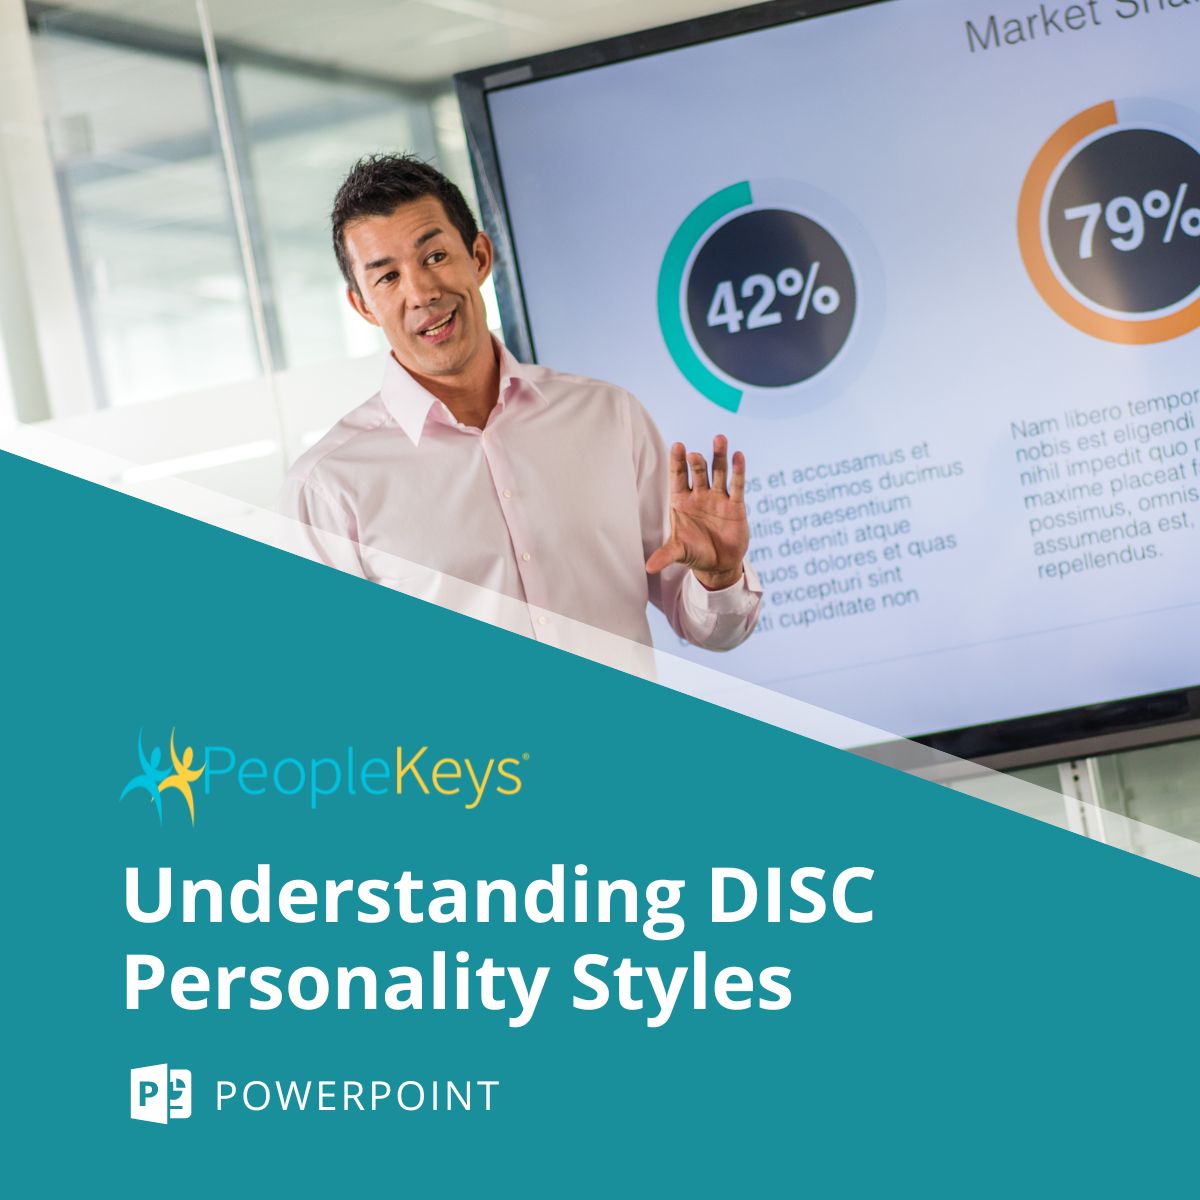 PowerPoint: Understanding DISC Personality Styles (Download)